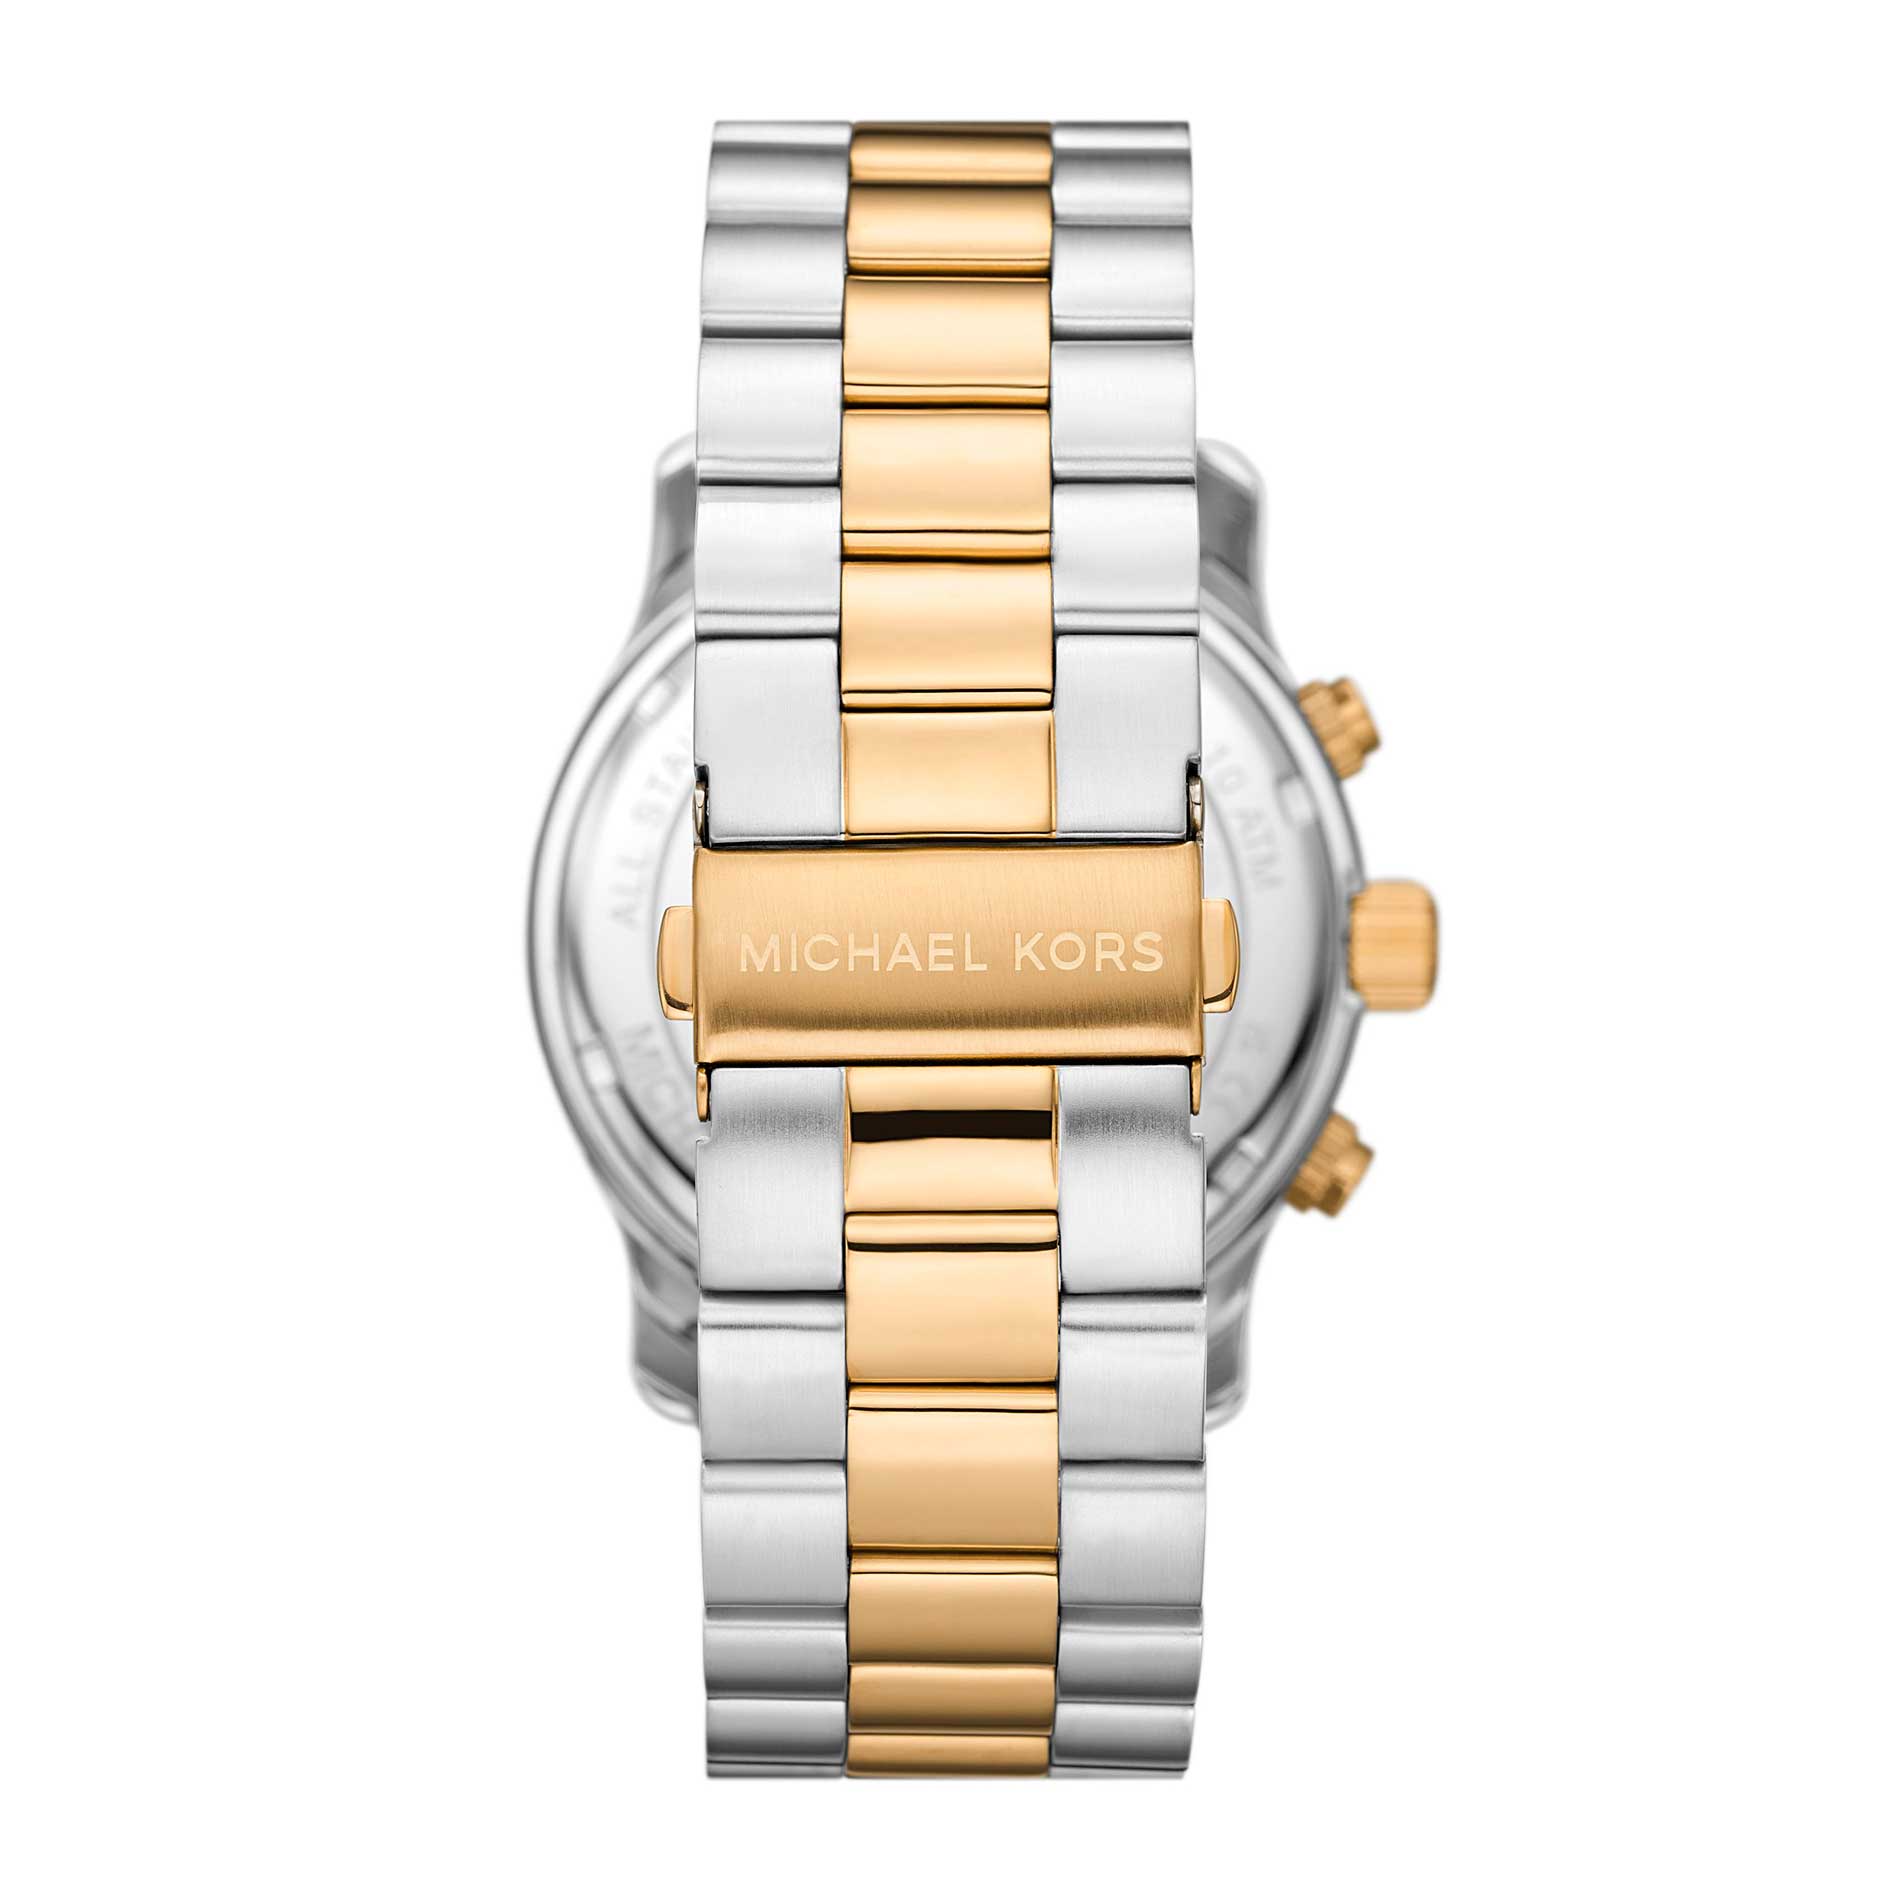 Michael Kors Runway MK9075 ur i rustfrit stål med gyldne detaljer på krans og lænke. Uret har en smuk gylden skive med tre chronographer samt dato. Uret er set bagfra.